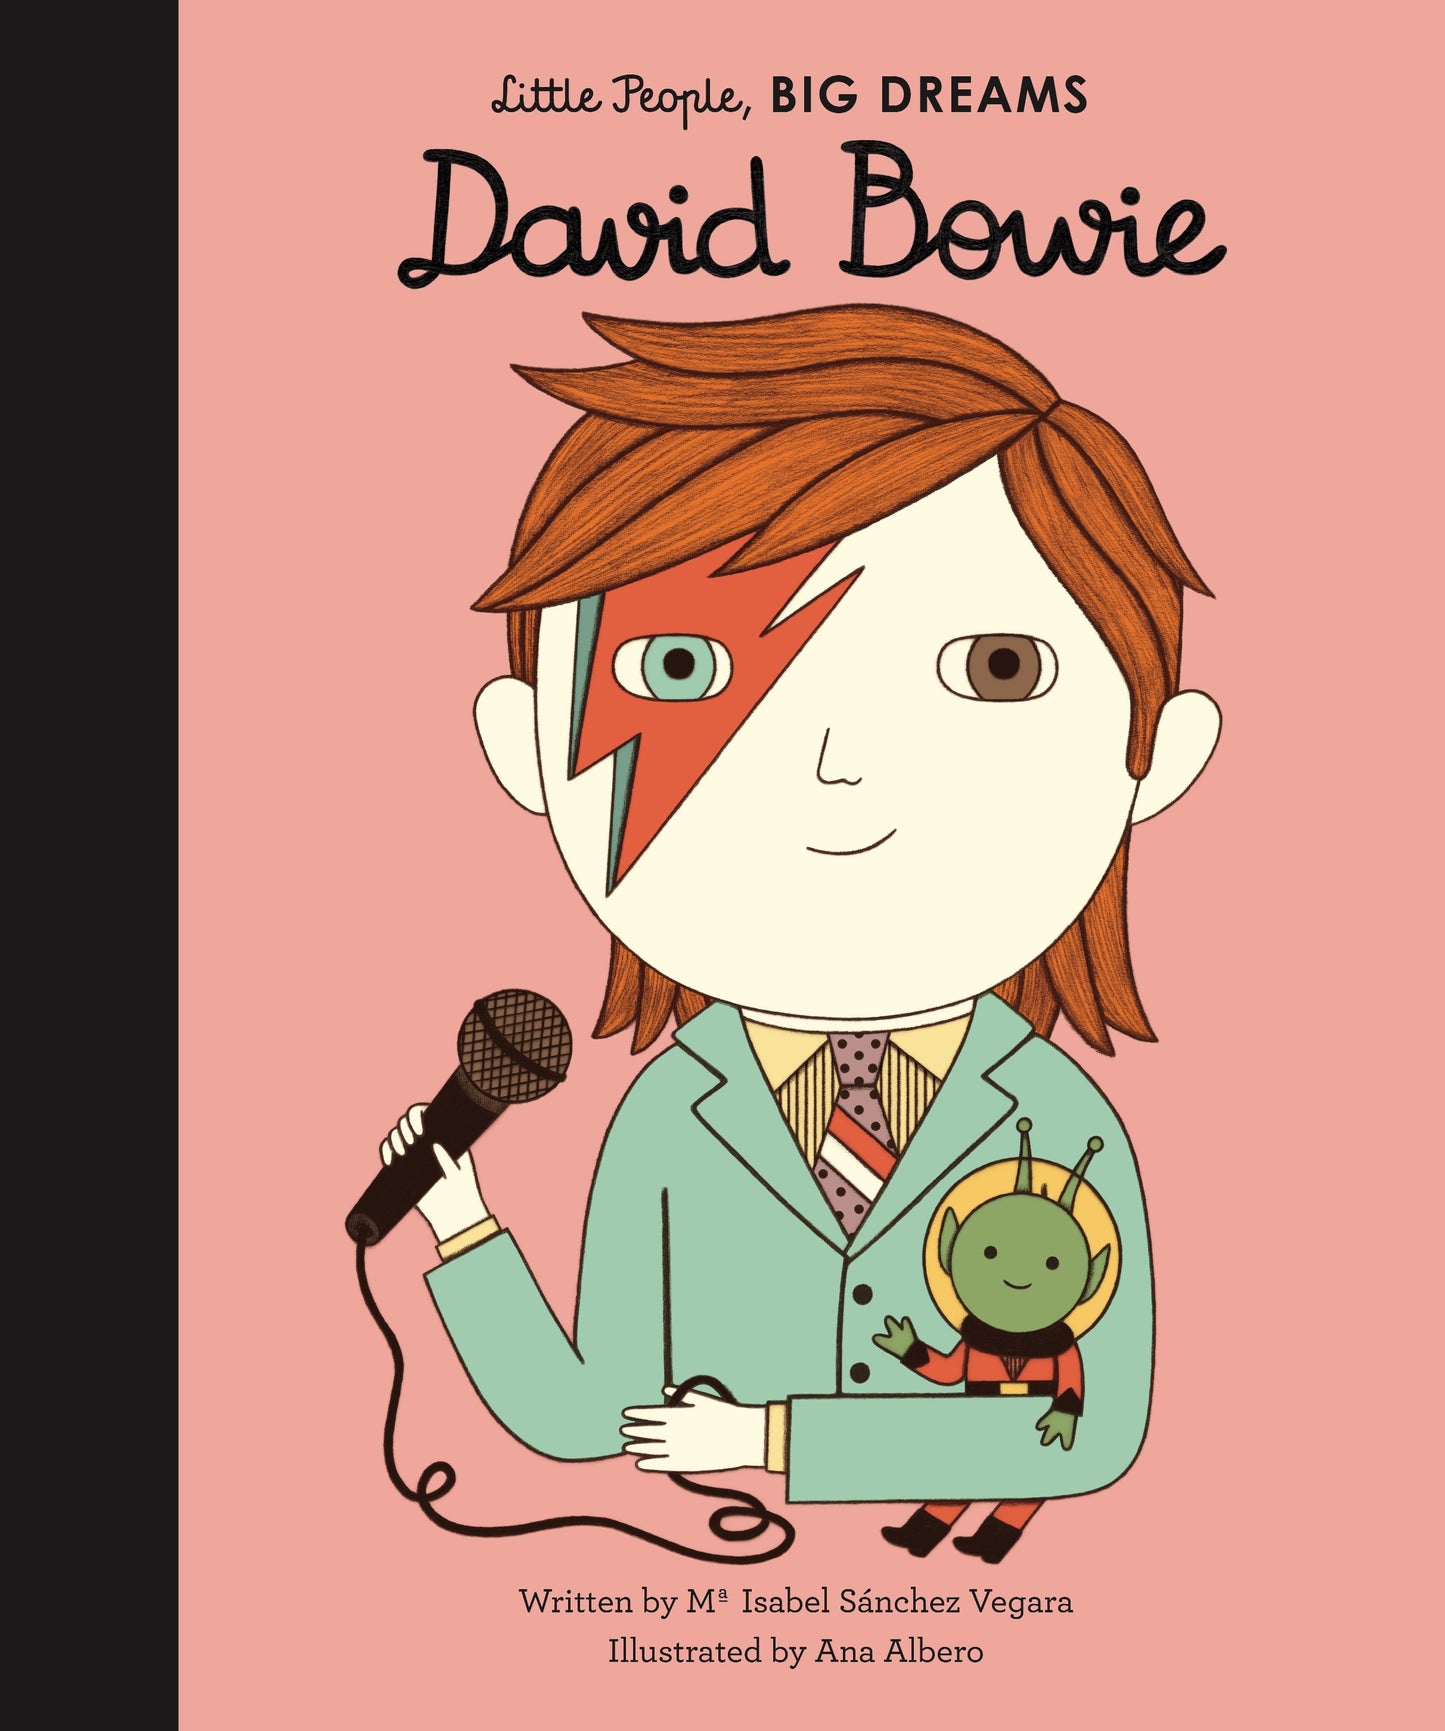 Little people, Big dreams David Bowie